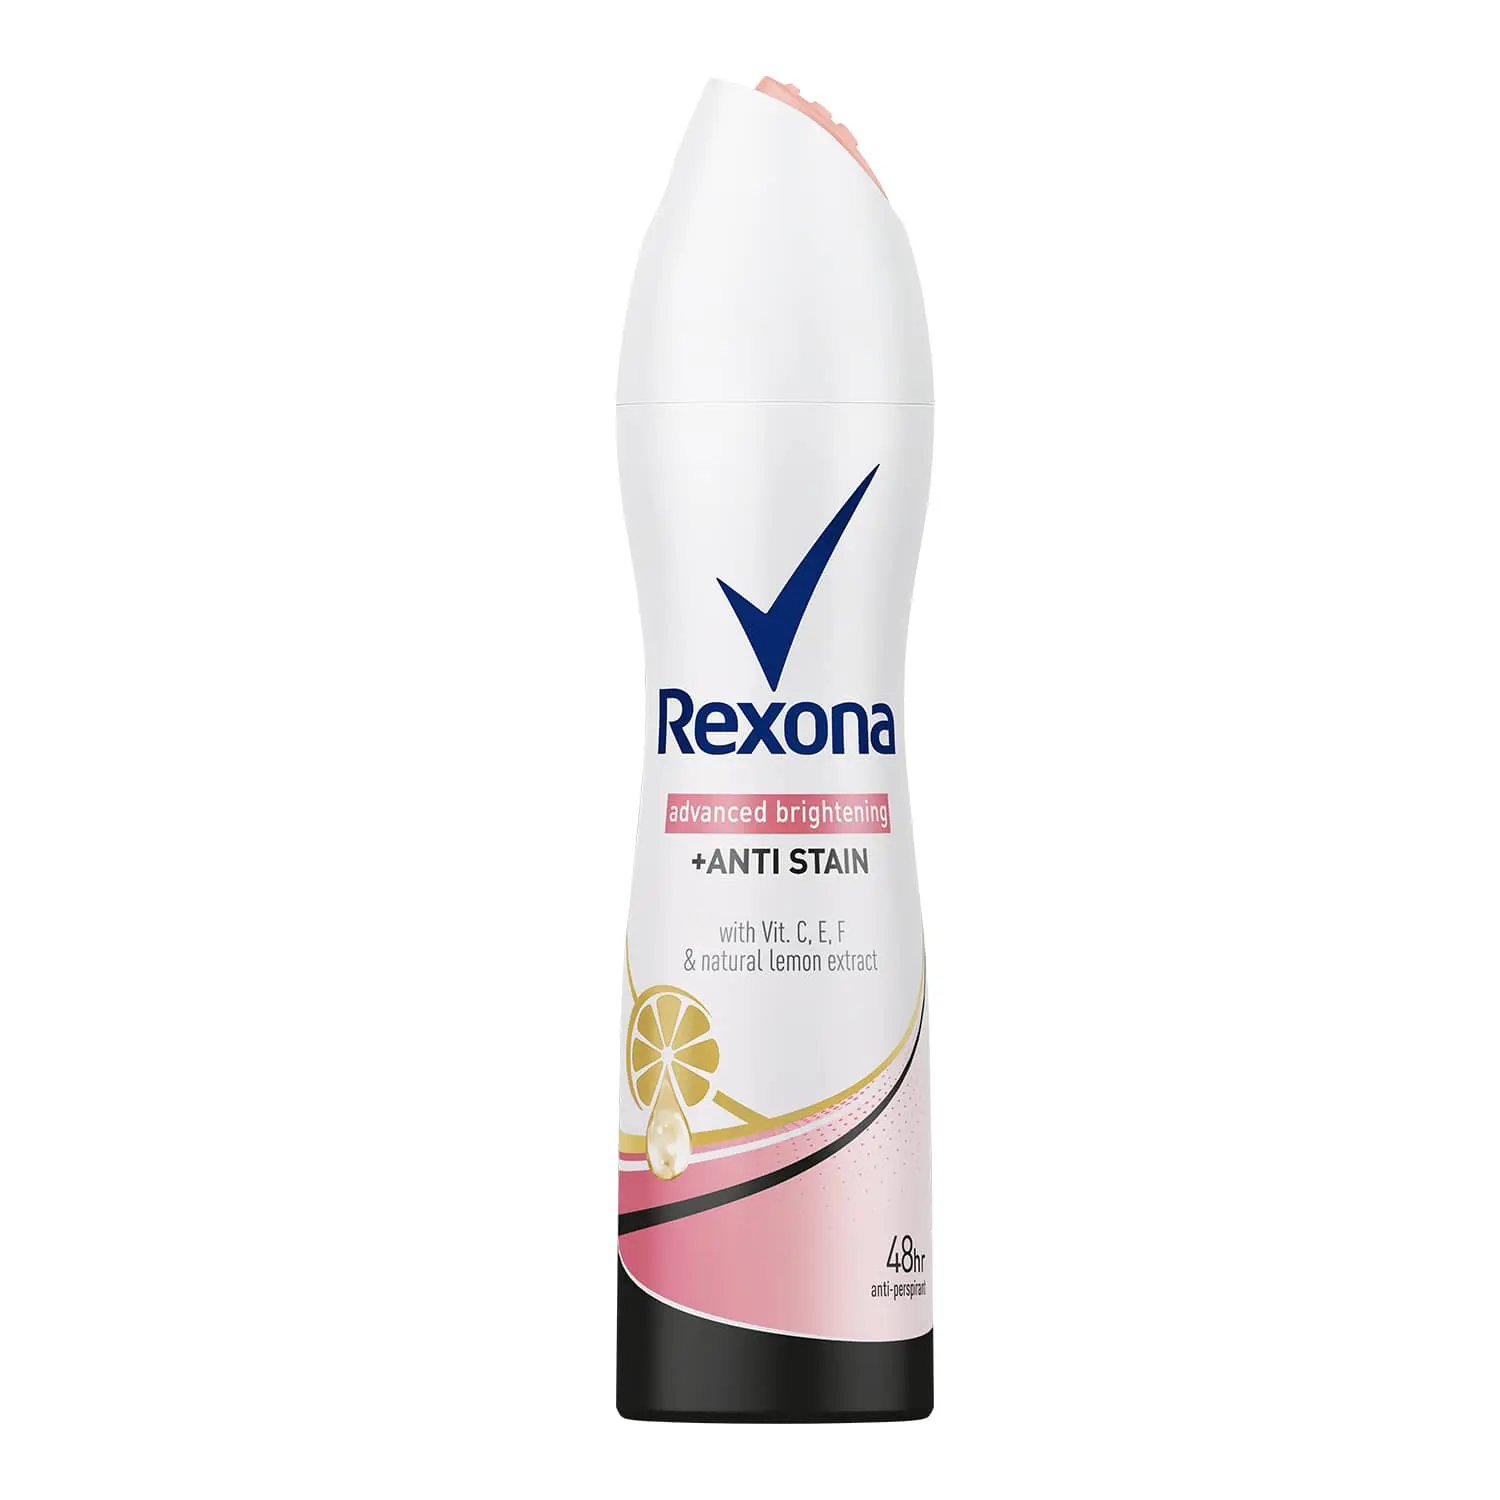 Rexona Deodorant Body Spray for Sale / Rexona Men Deodorant Lime Fresh Spray 150 Ml for export